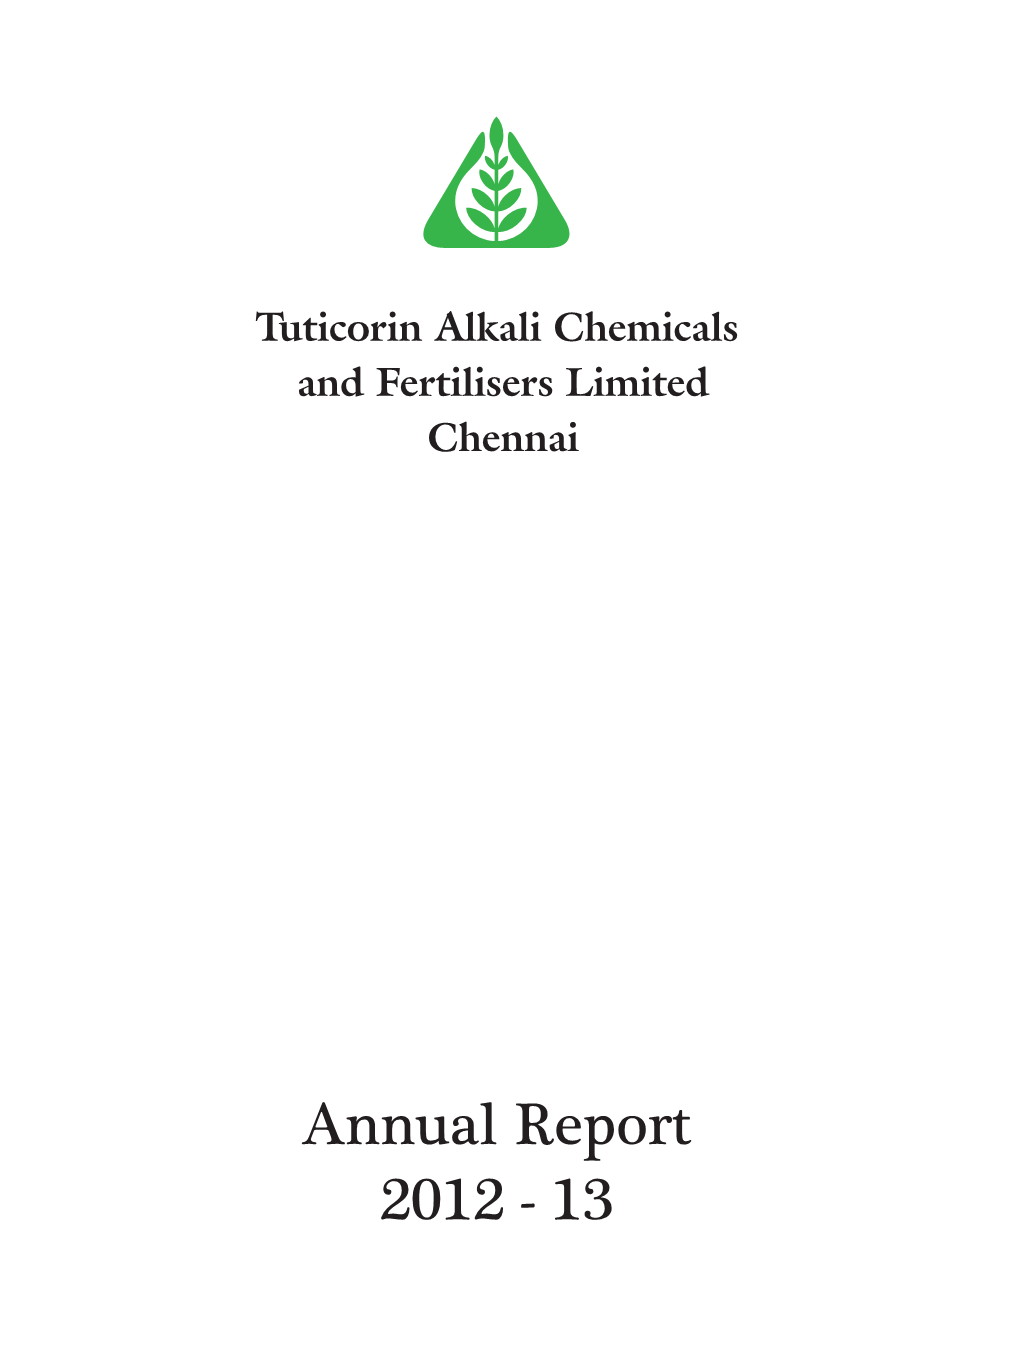 Annual Report 2012 - 13